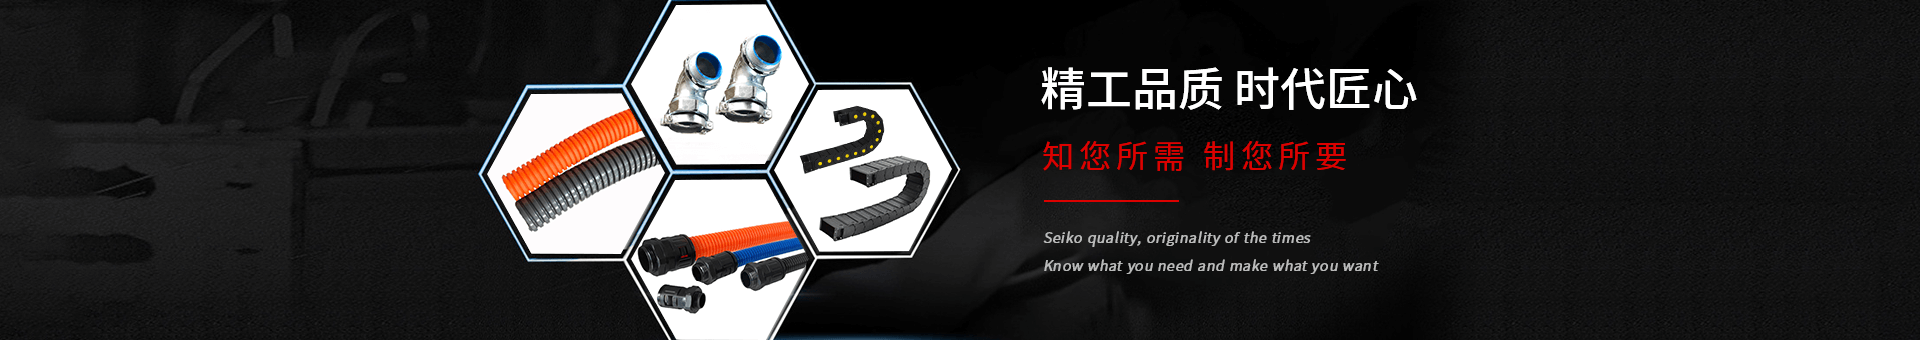 kok体育官方入口机械banner